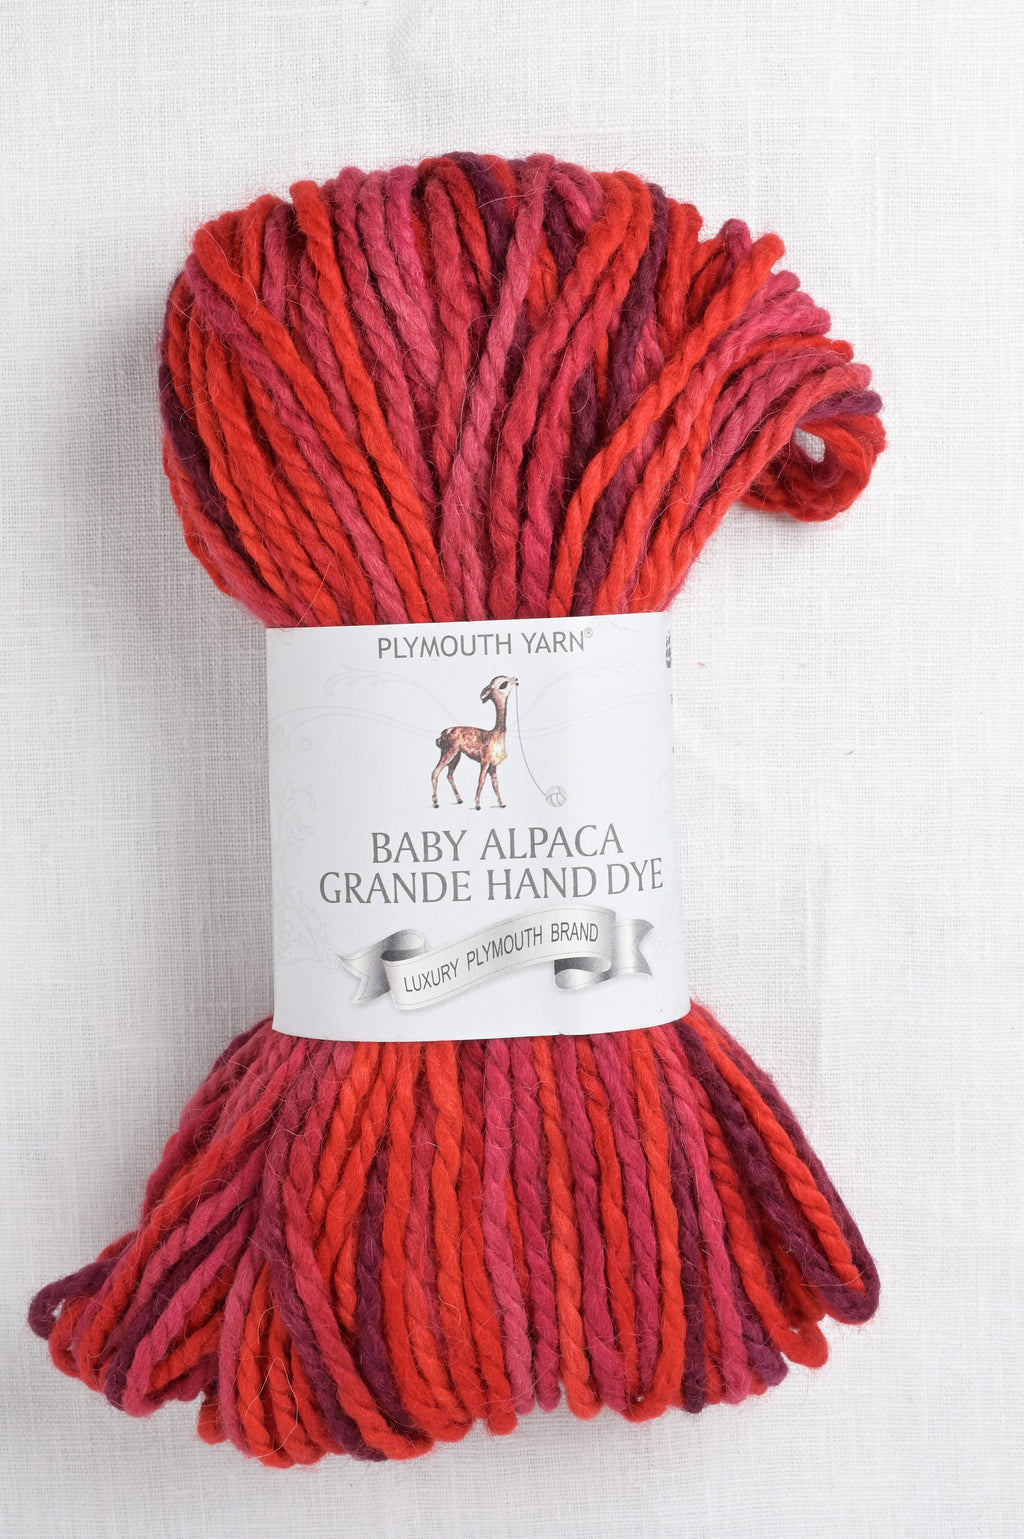 Red alpaca wool yarn blend